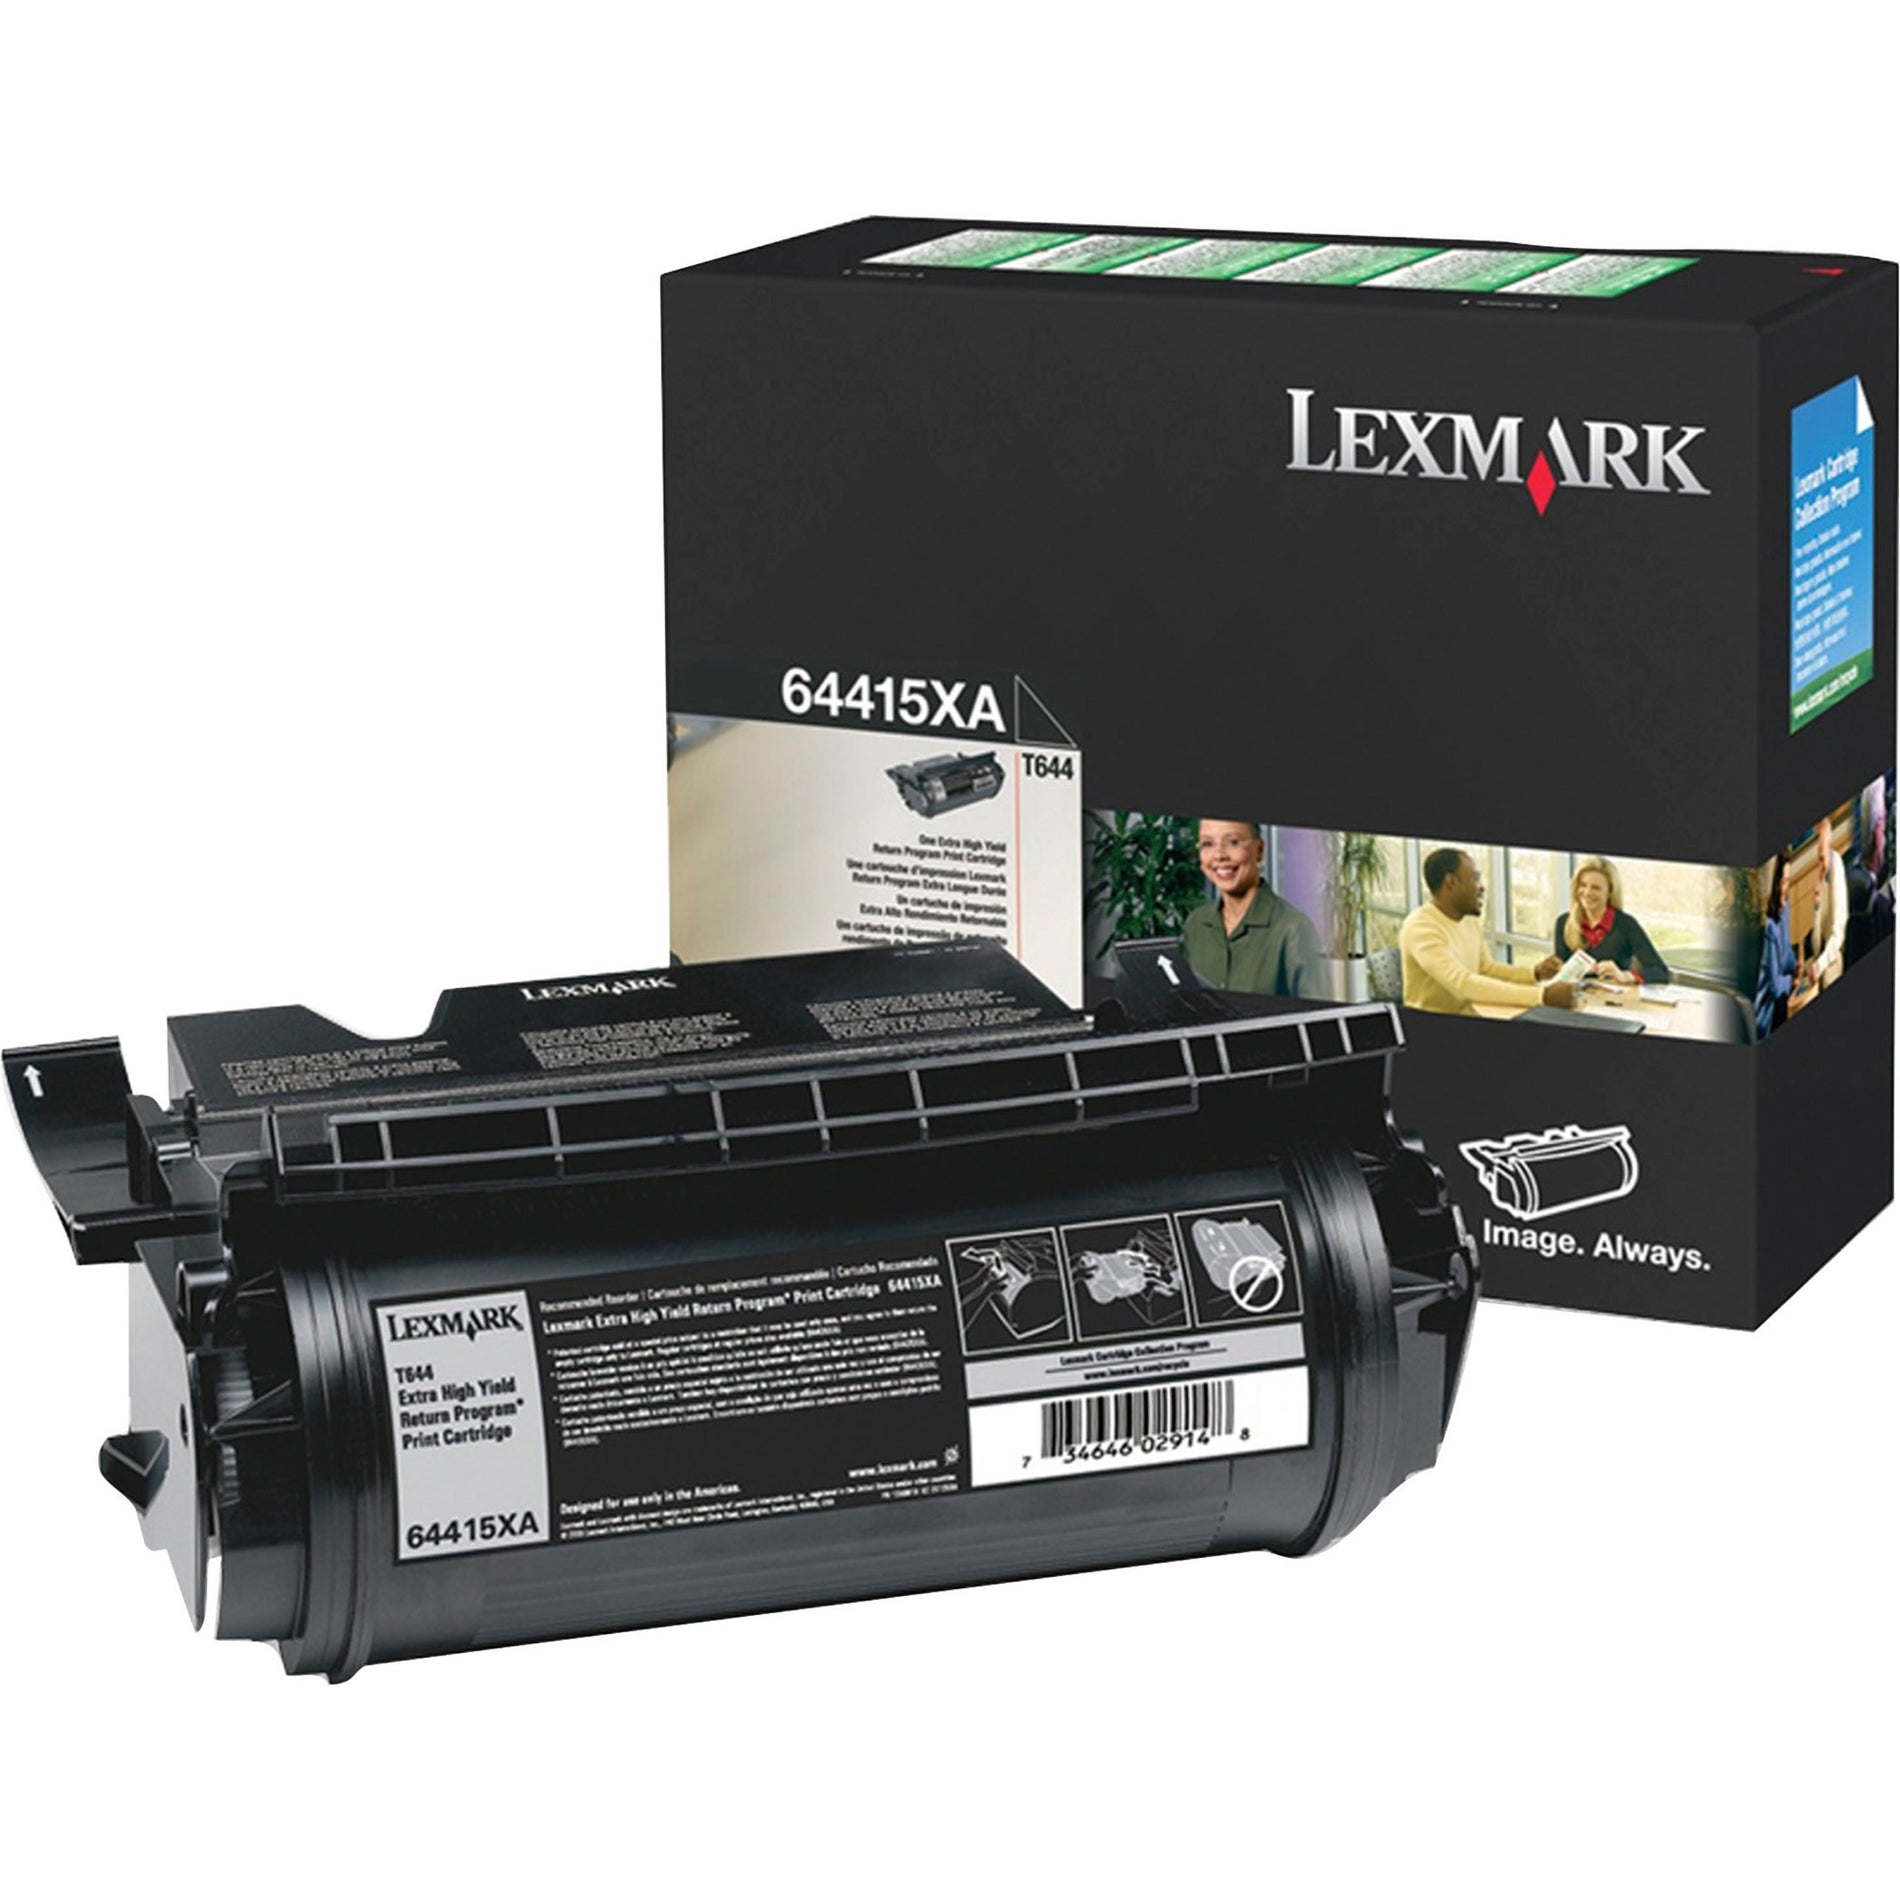 Lexmark 64415XA Original Toner Cartridge, Black, 32,000 Pages Yield